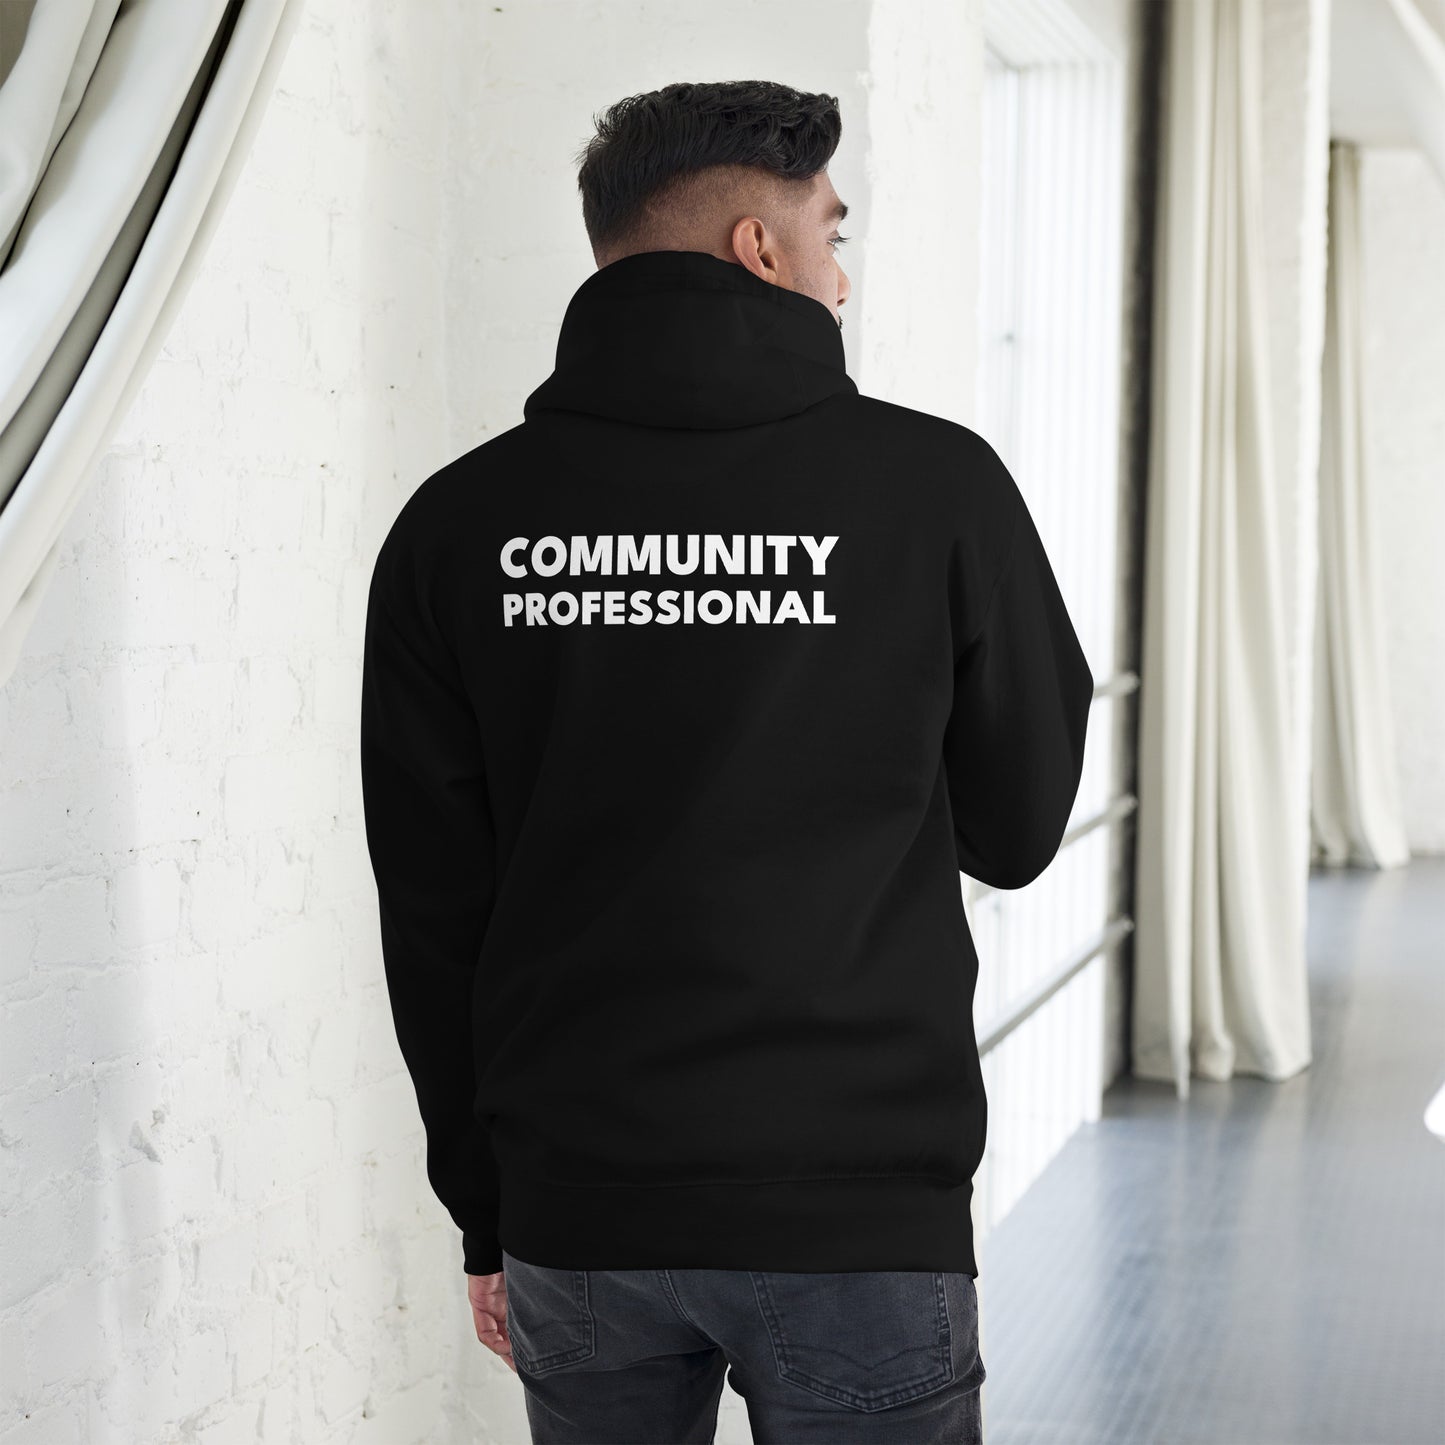 COMMUNITY PROFESSIONAL hoodie